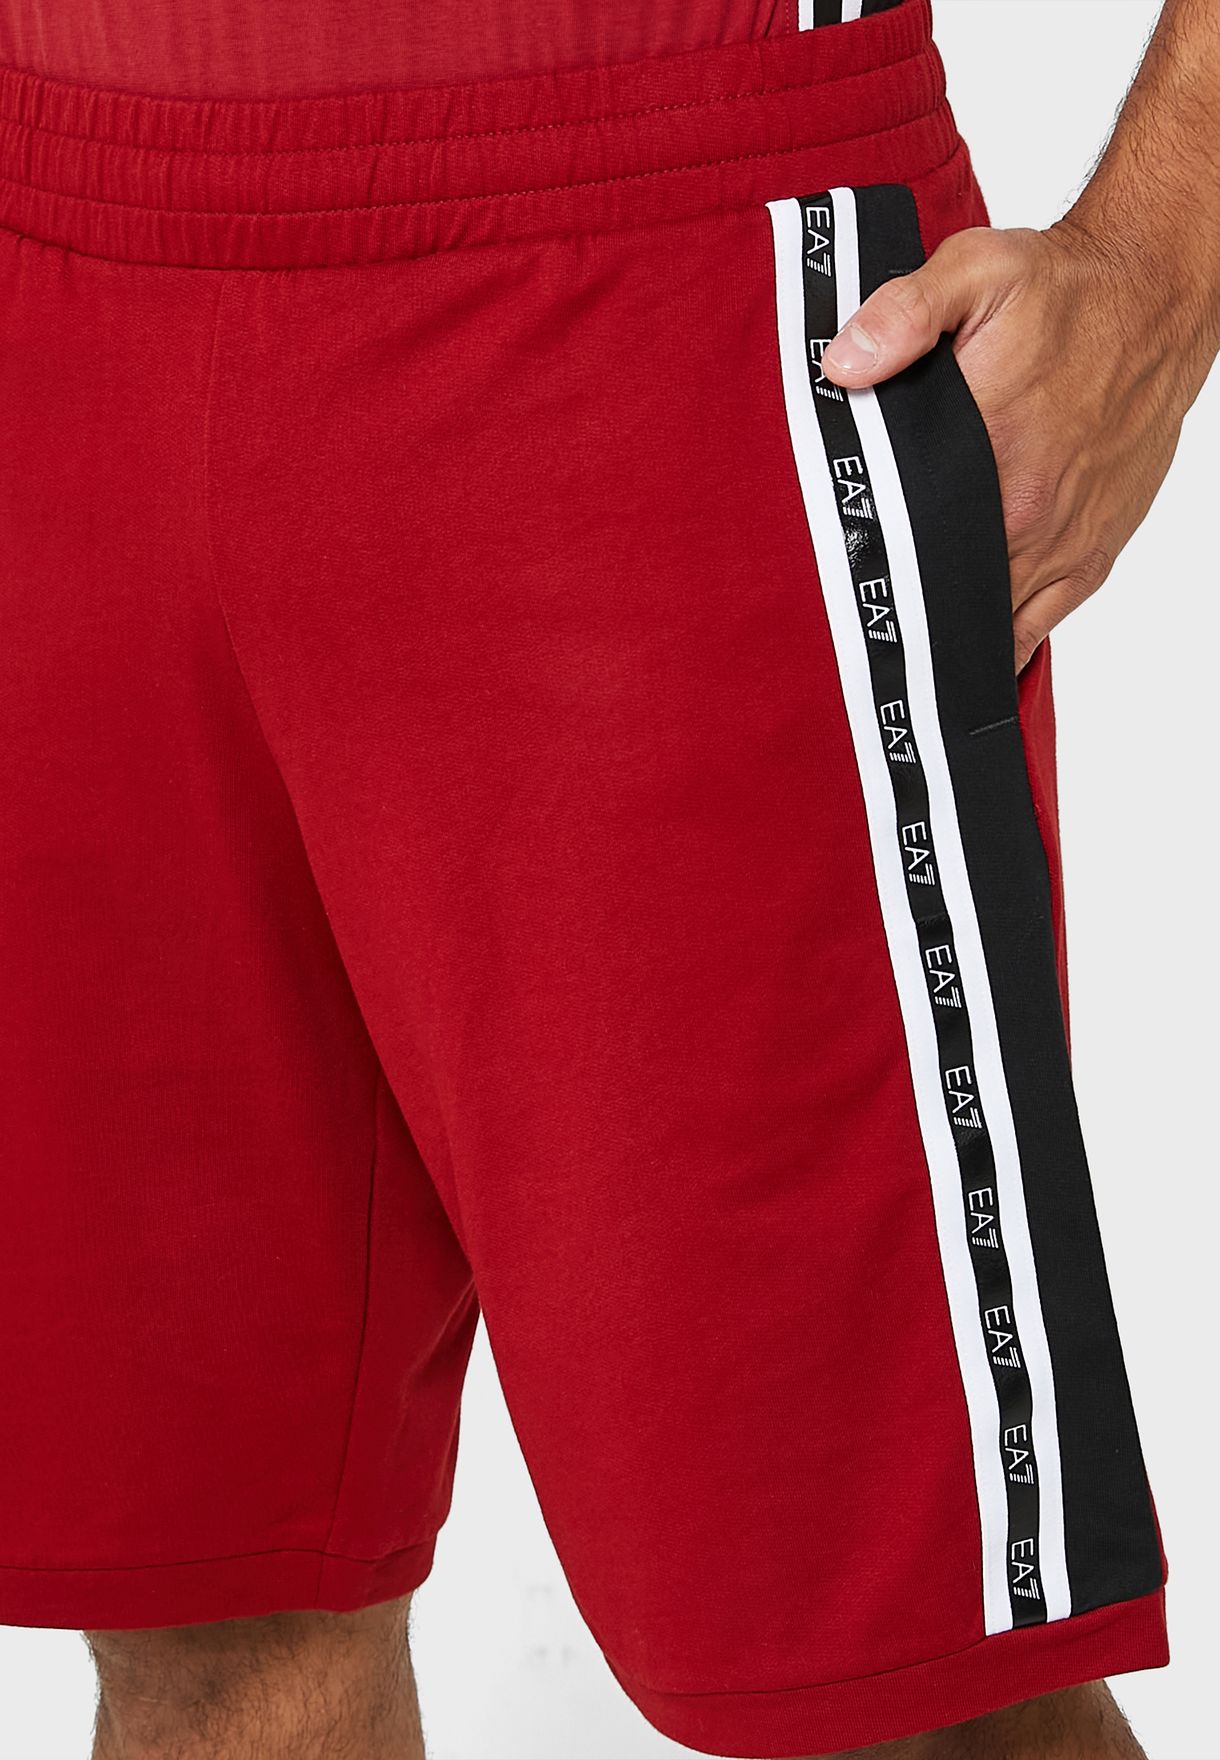 Buy Ea7 Emporio Armani red Casual Shorts for Men in Dubai, Abu Dhabi